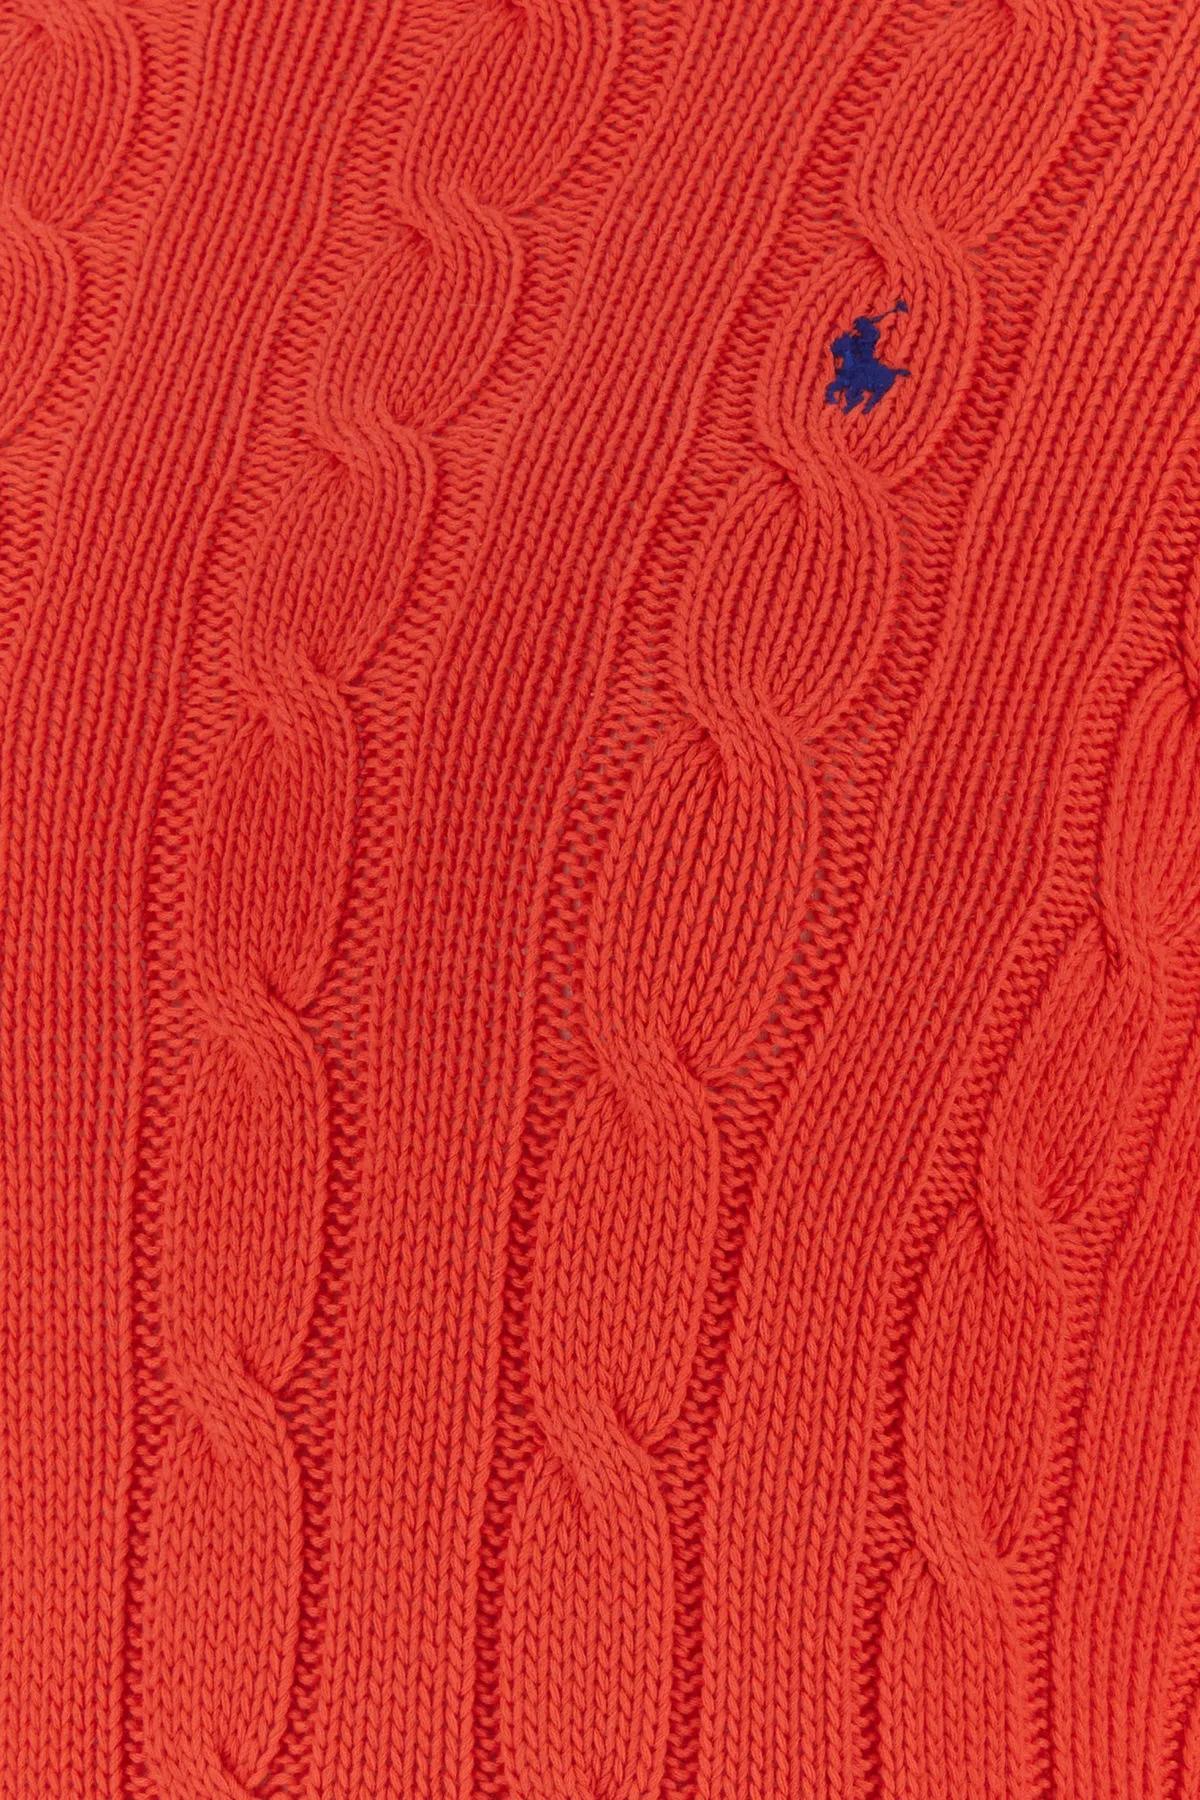 Shop Polo Ralph Lauren Red Cotton Sweater